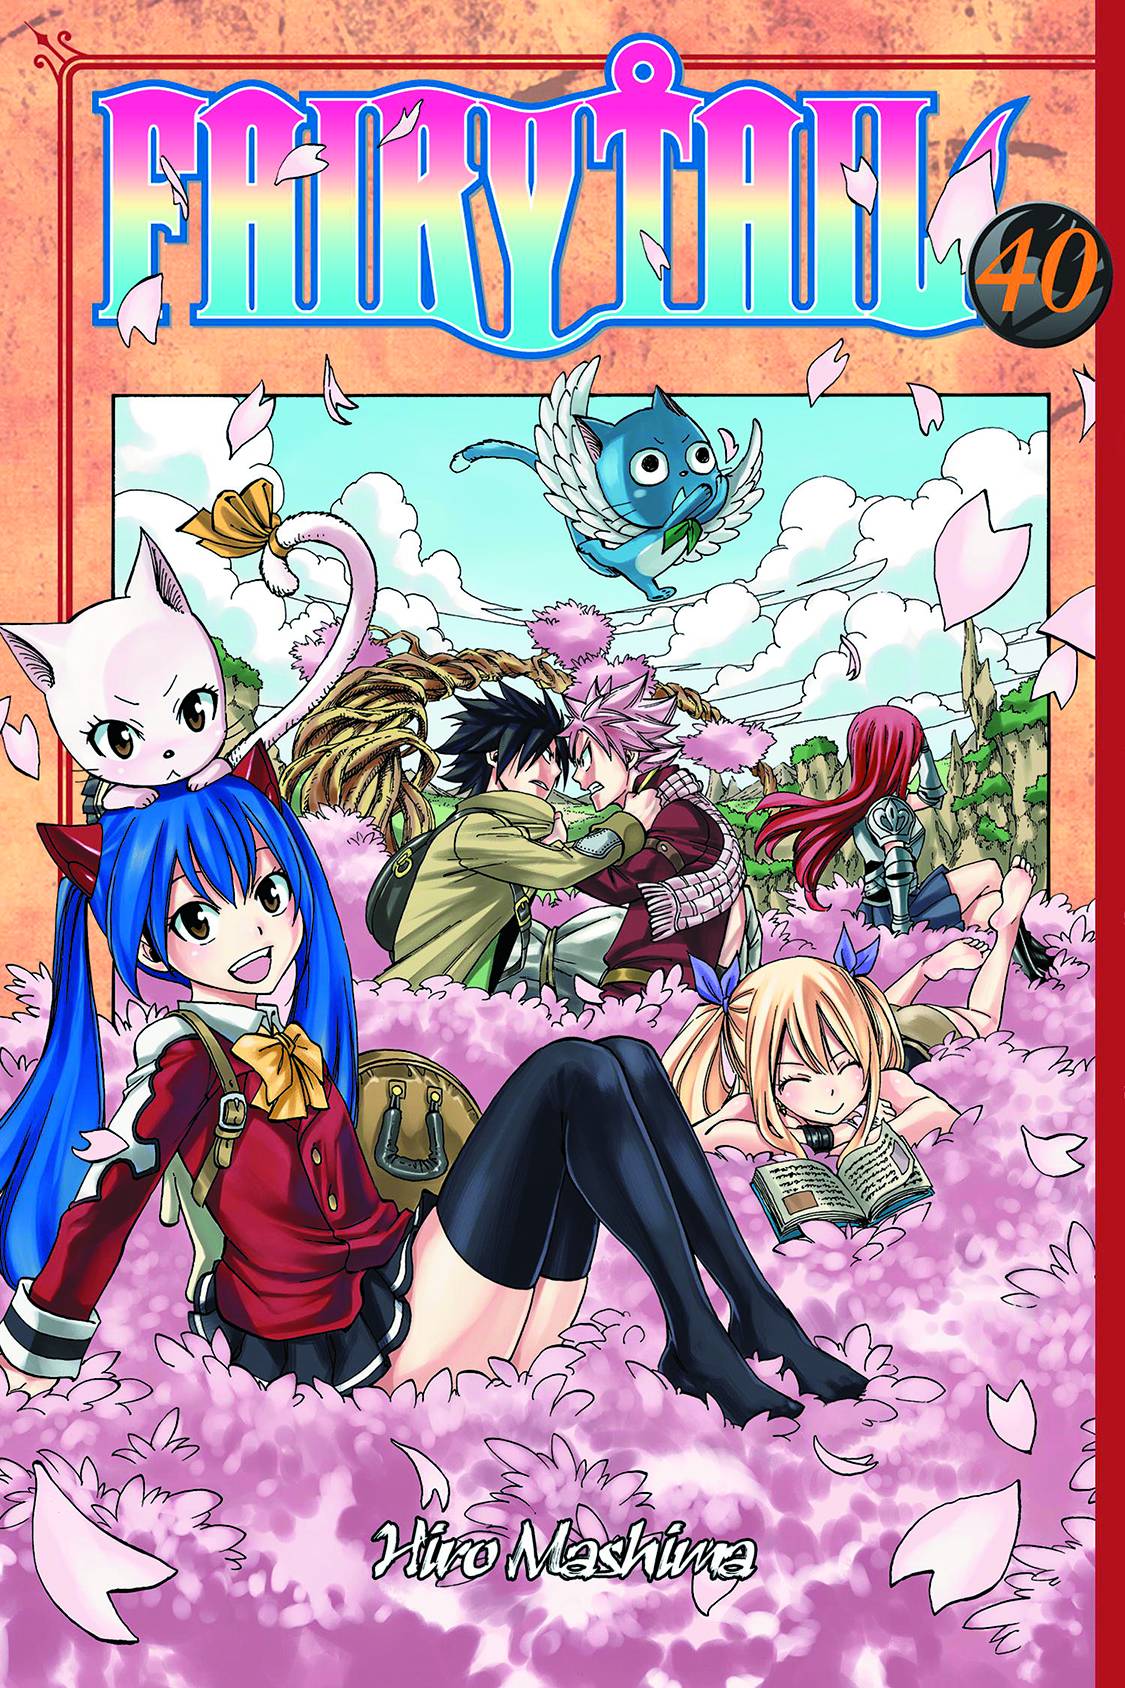 Fairy Tail Manga Volume 40